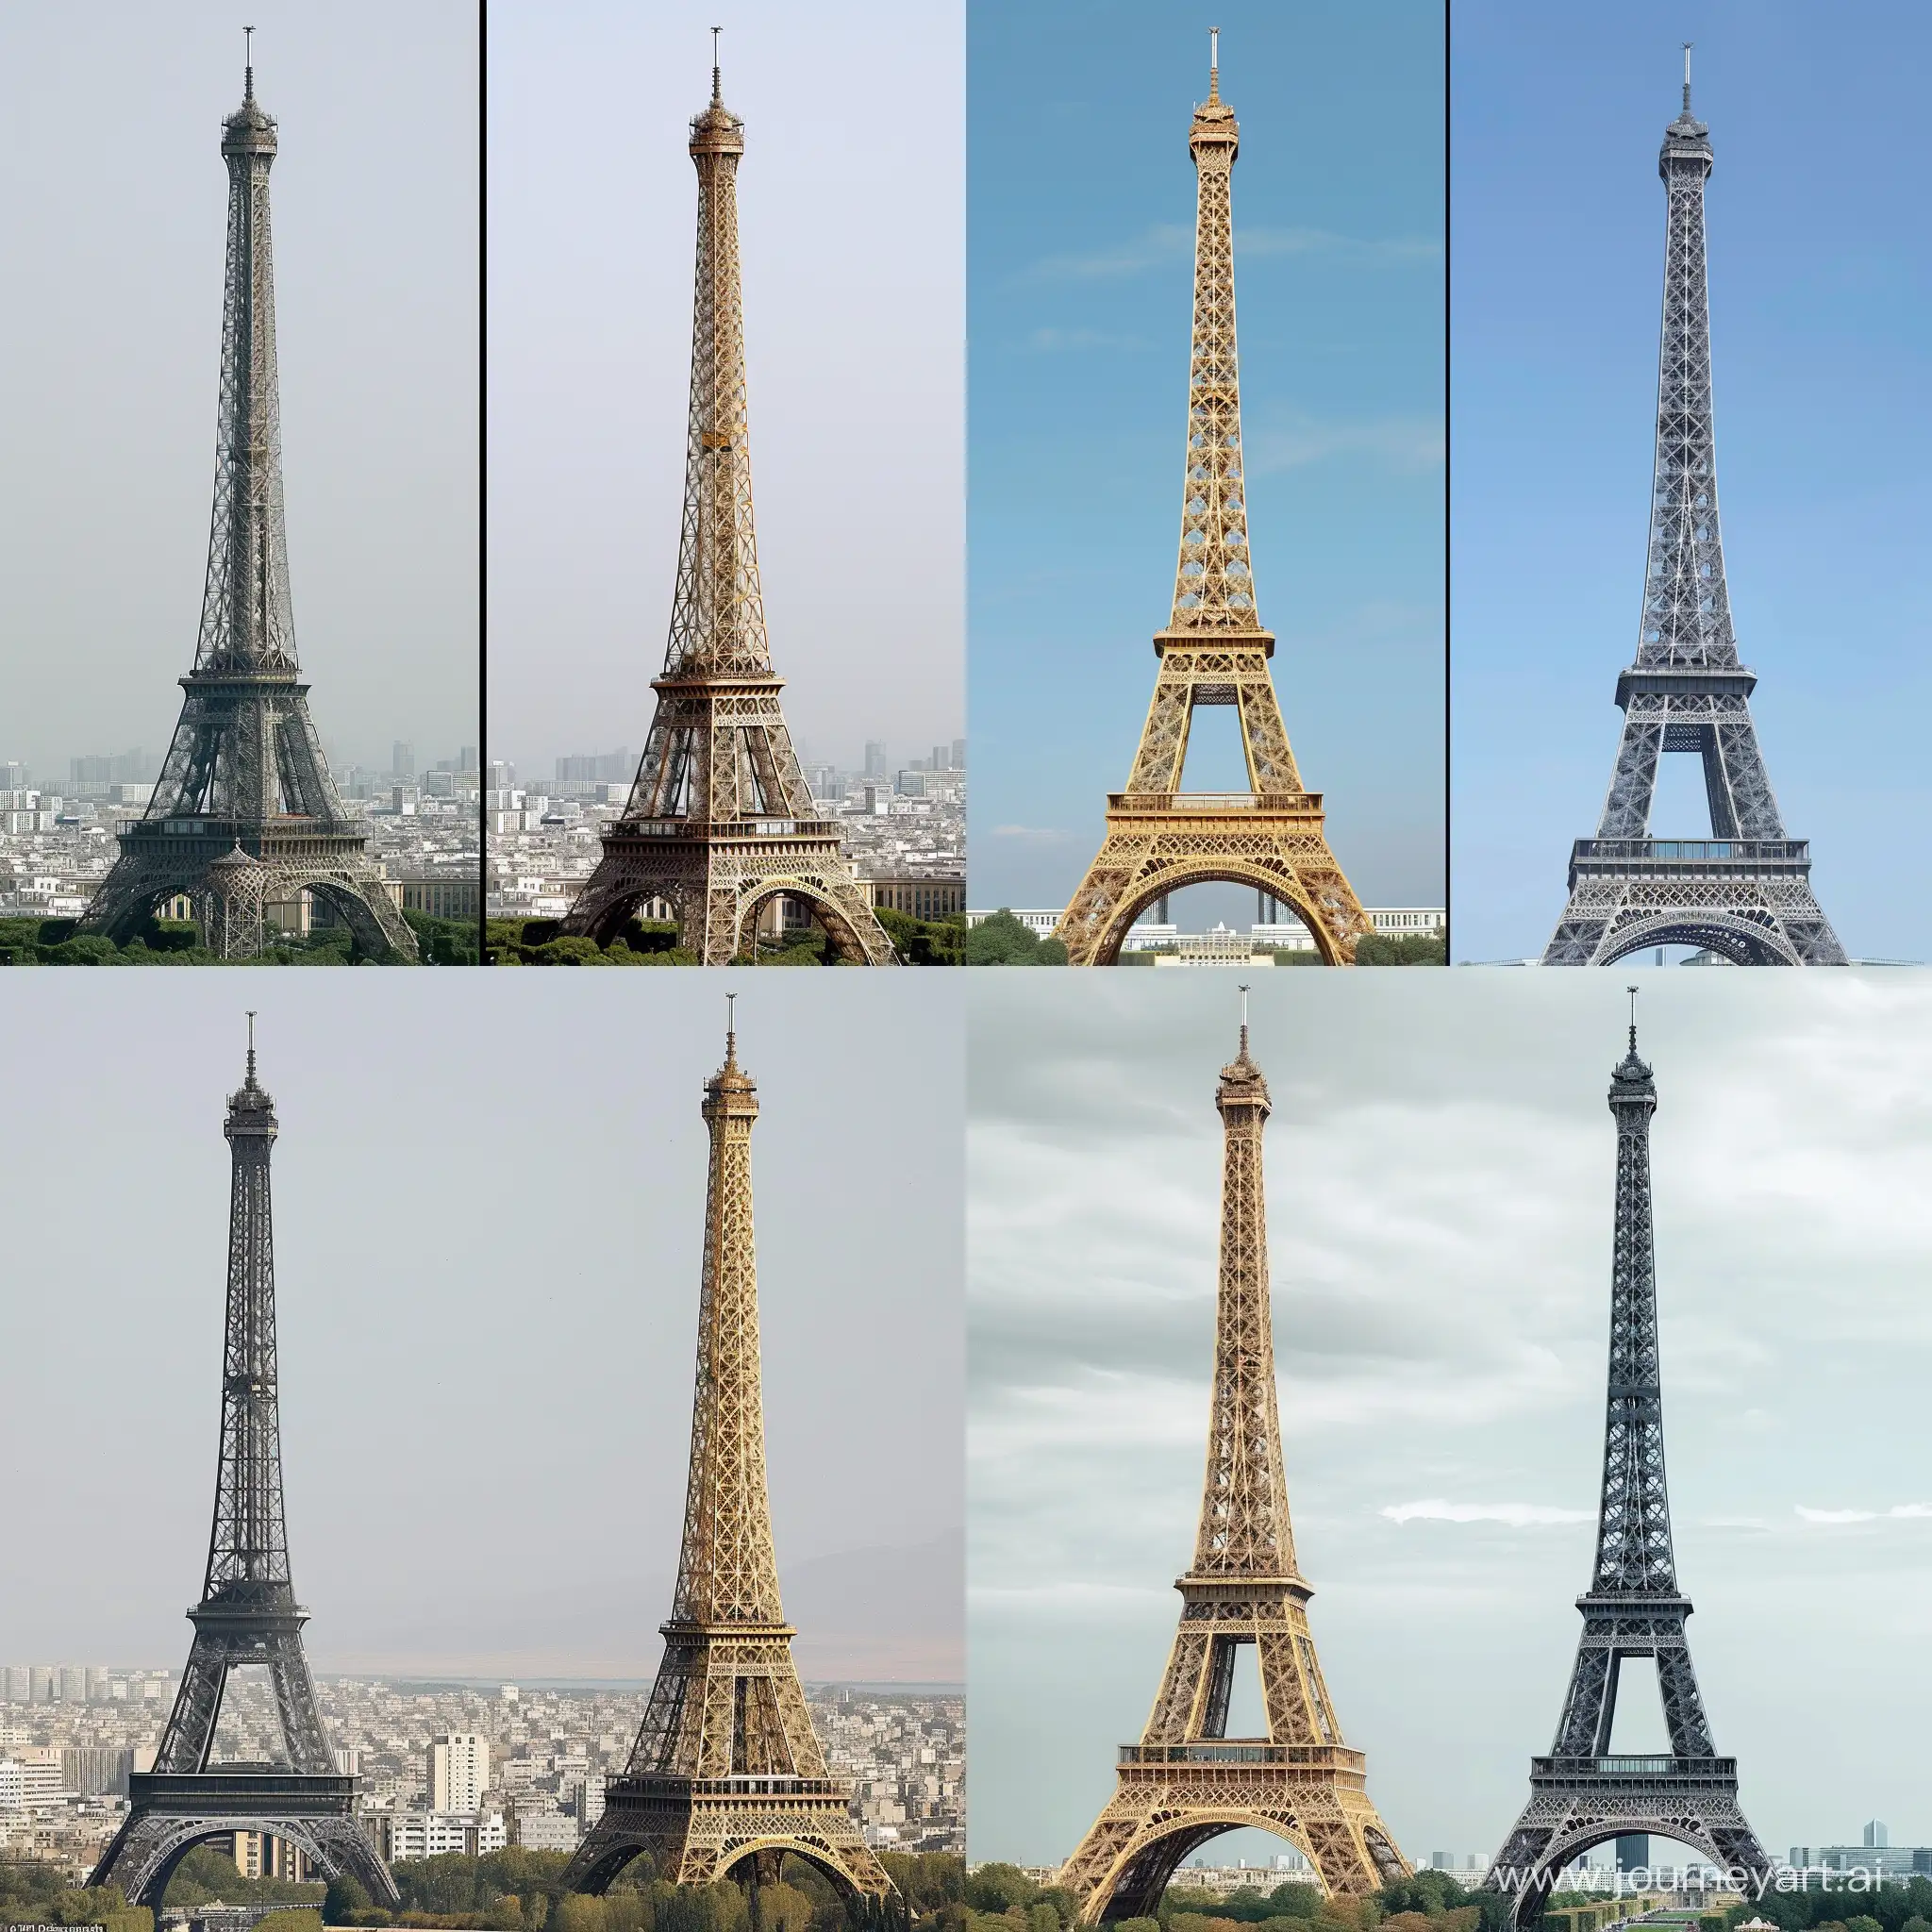  Put Eiffel Tower instead of Milad Tower